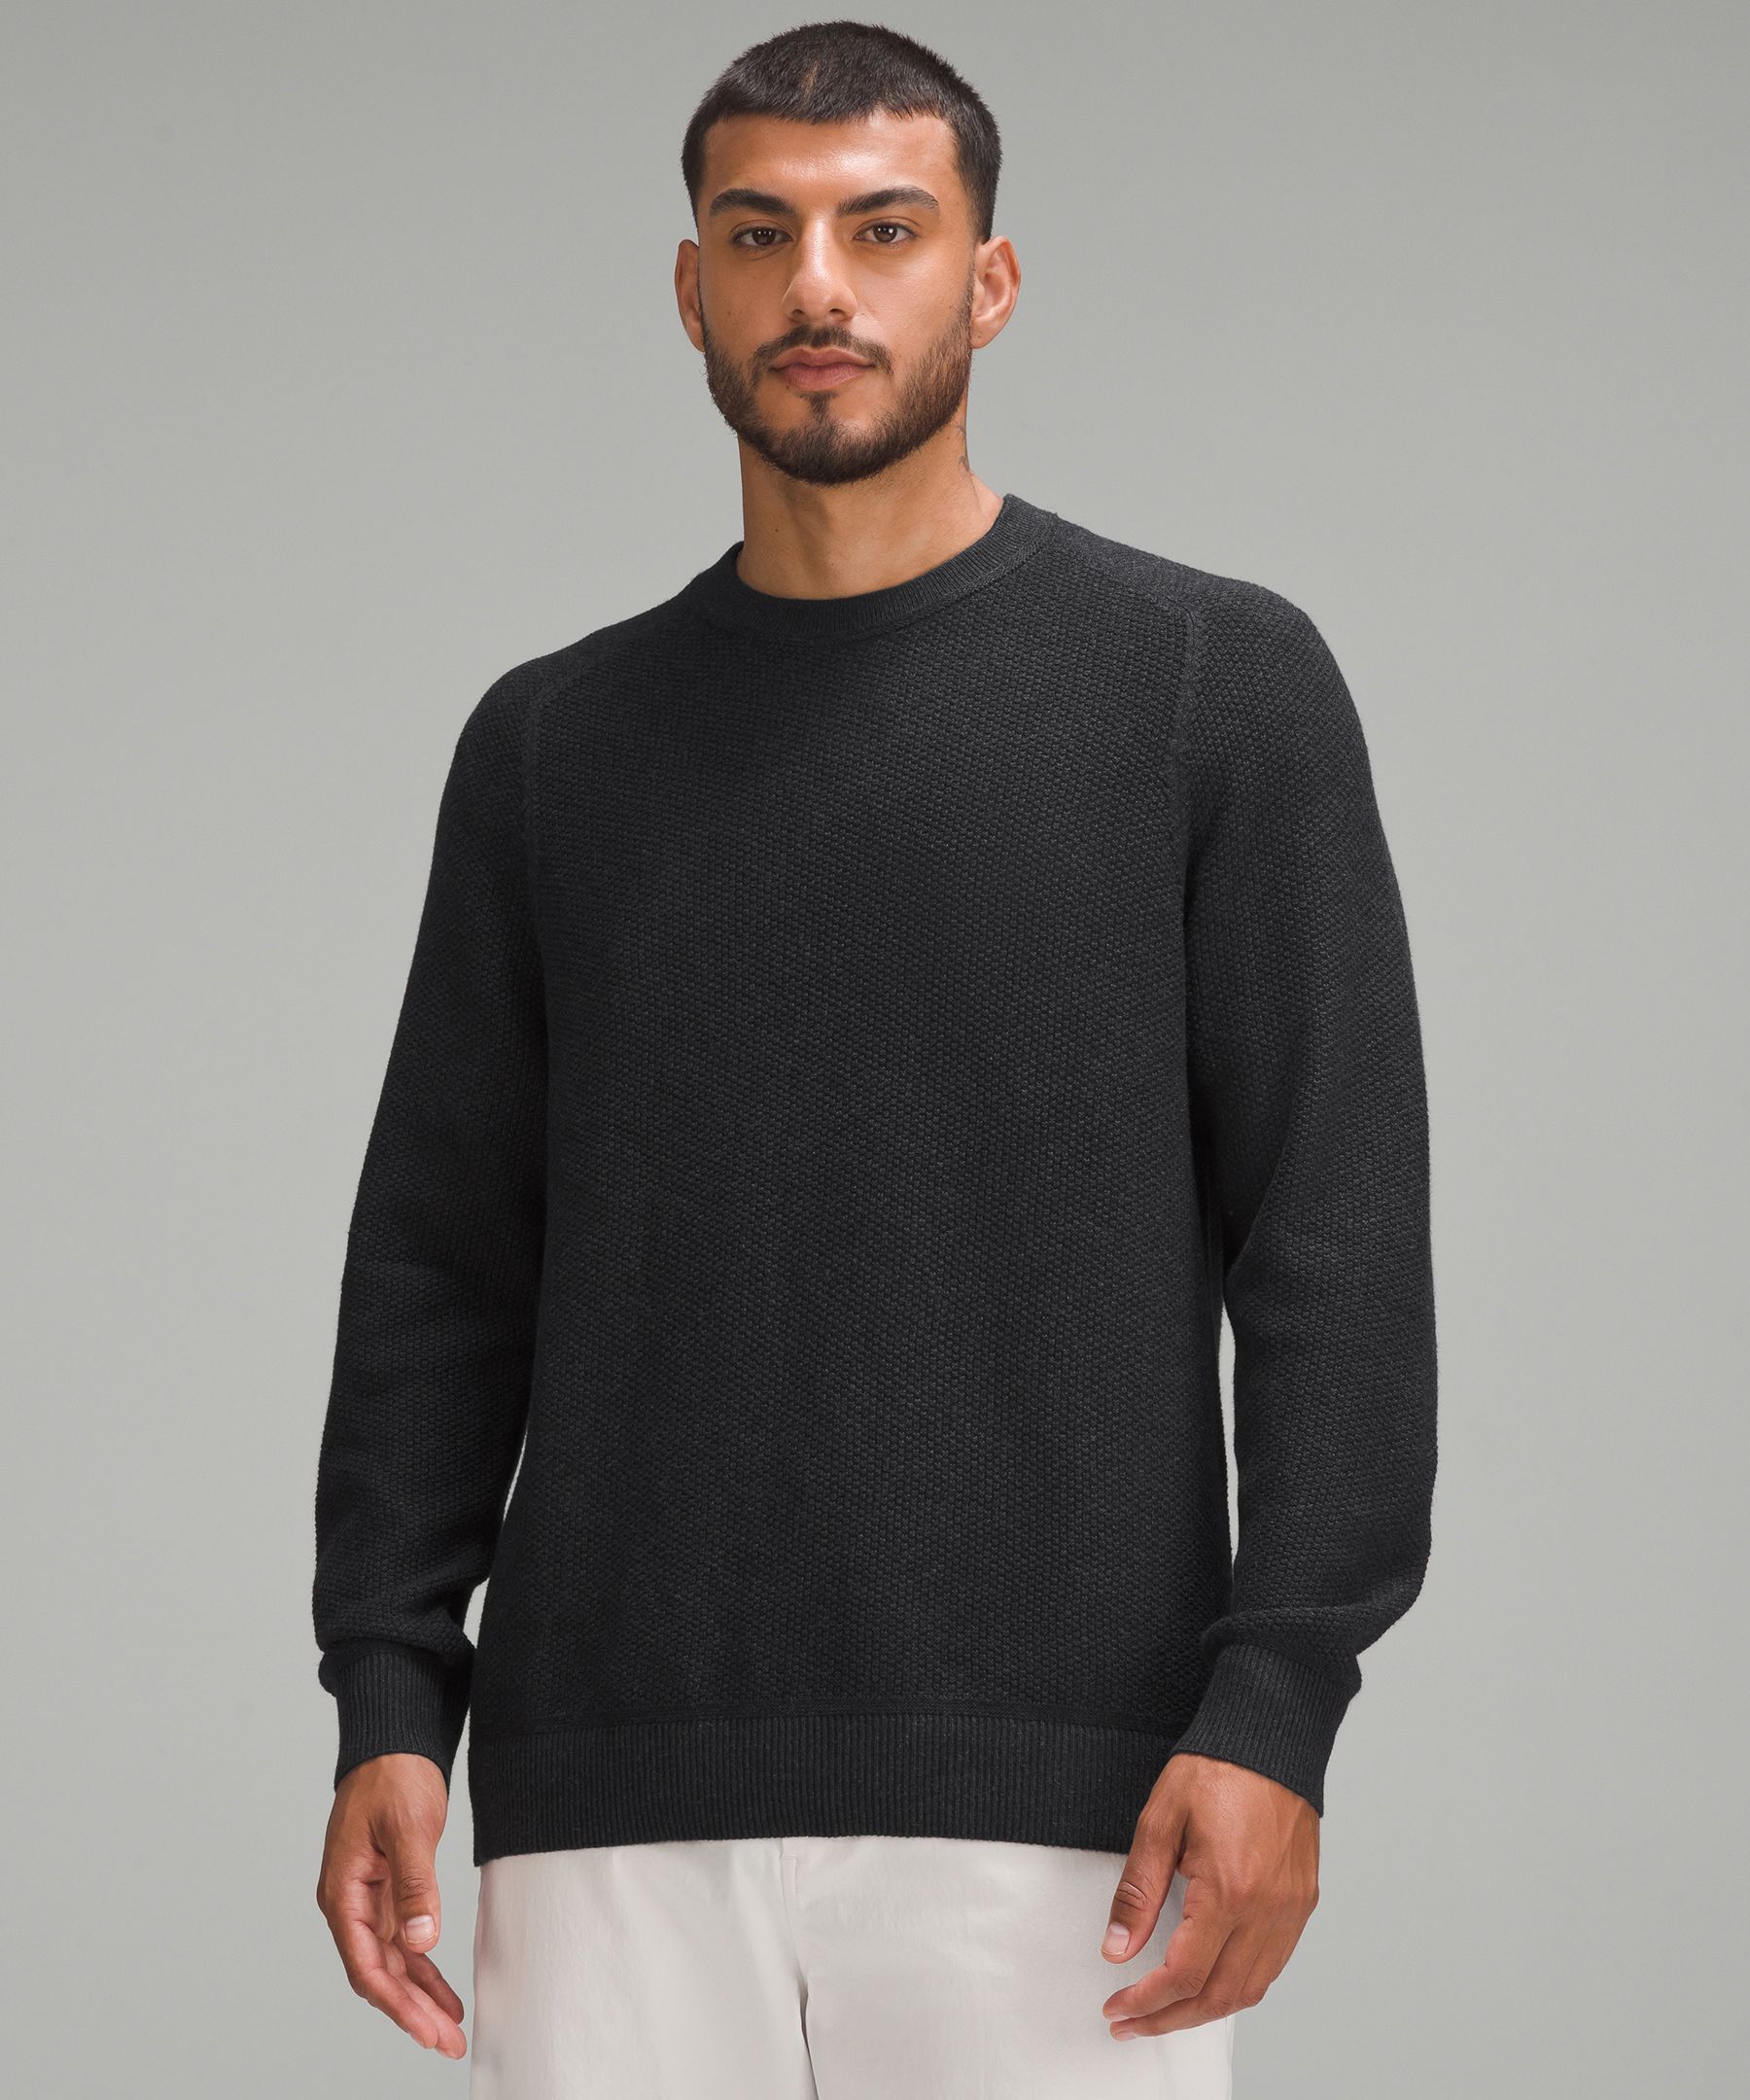 Textured Knit Crewneck Sweater, Men's Hoodies & Sweatshirts